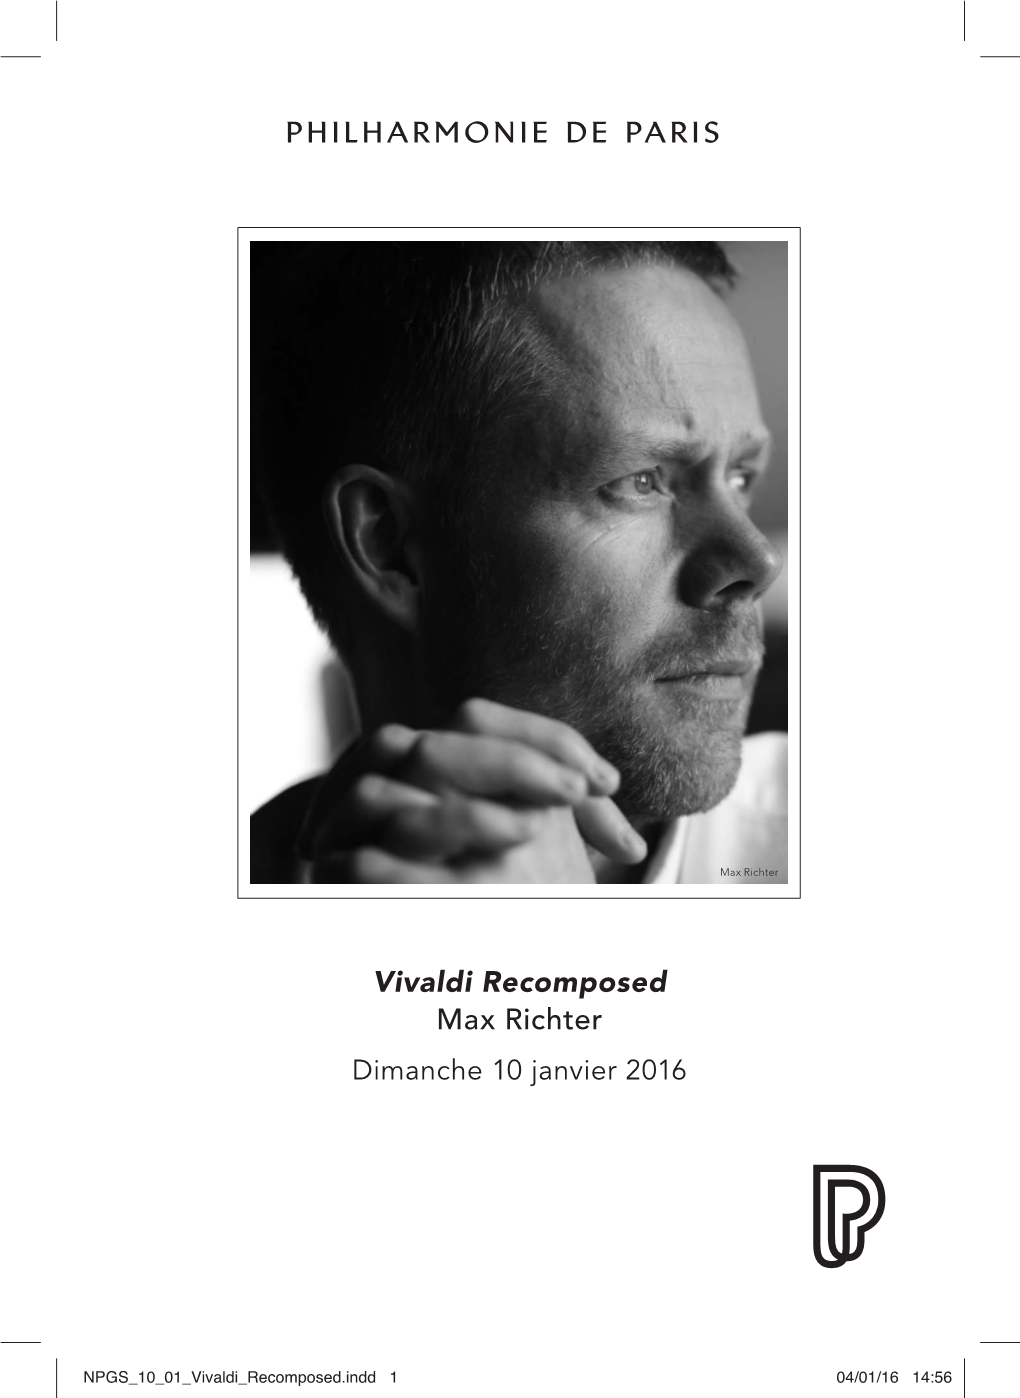 Vivaldi Recomposed Max Richter Dimanche 10 Janvier 2016